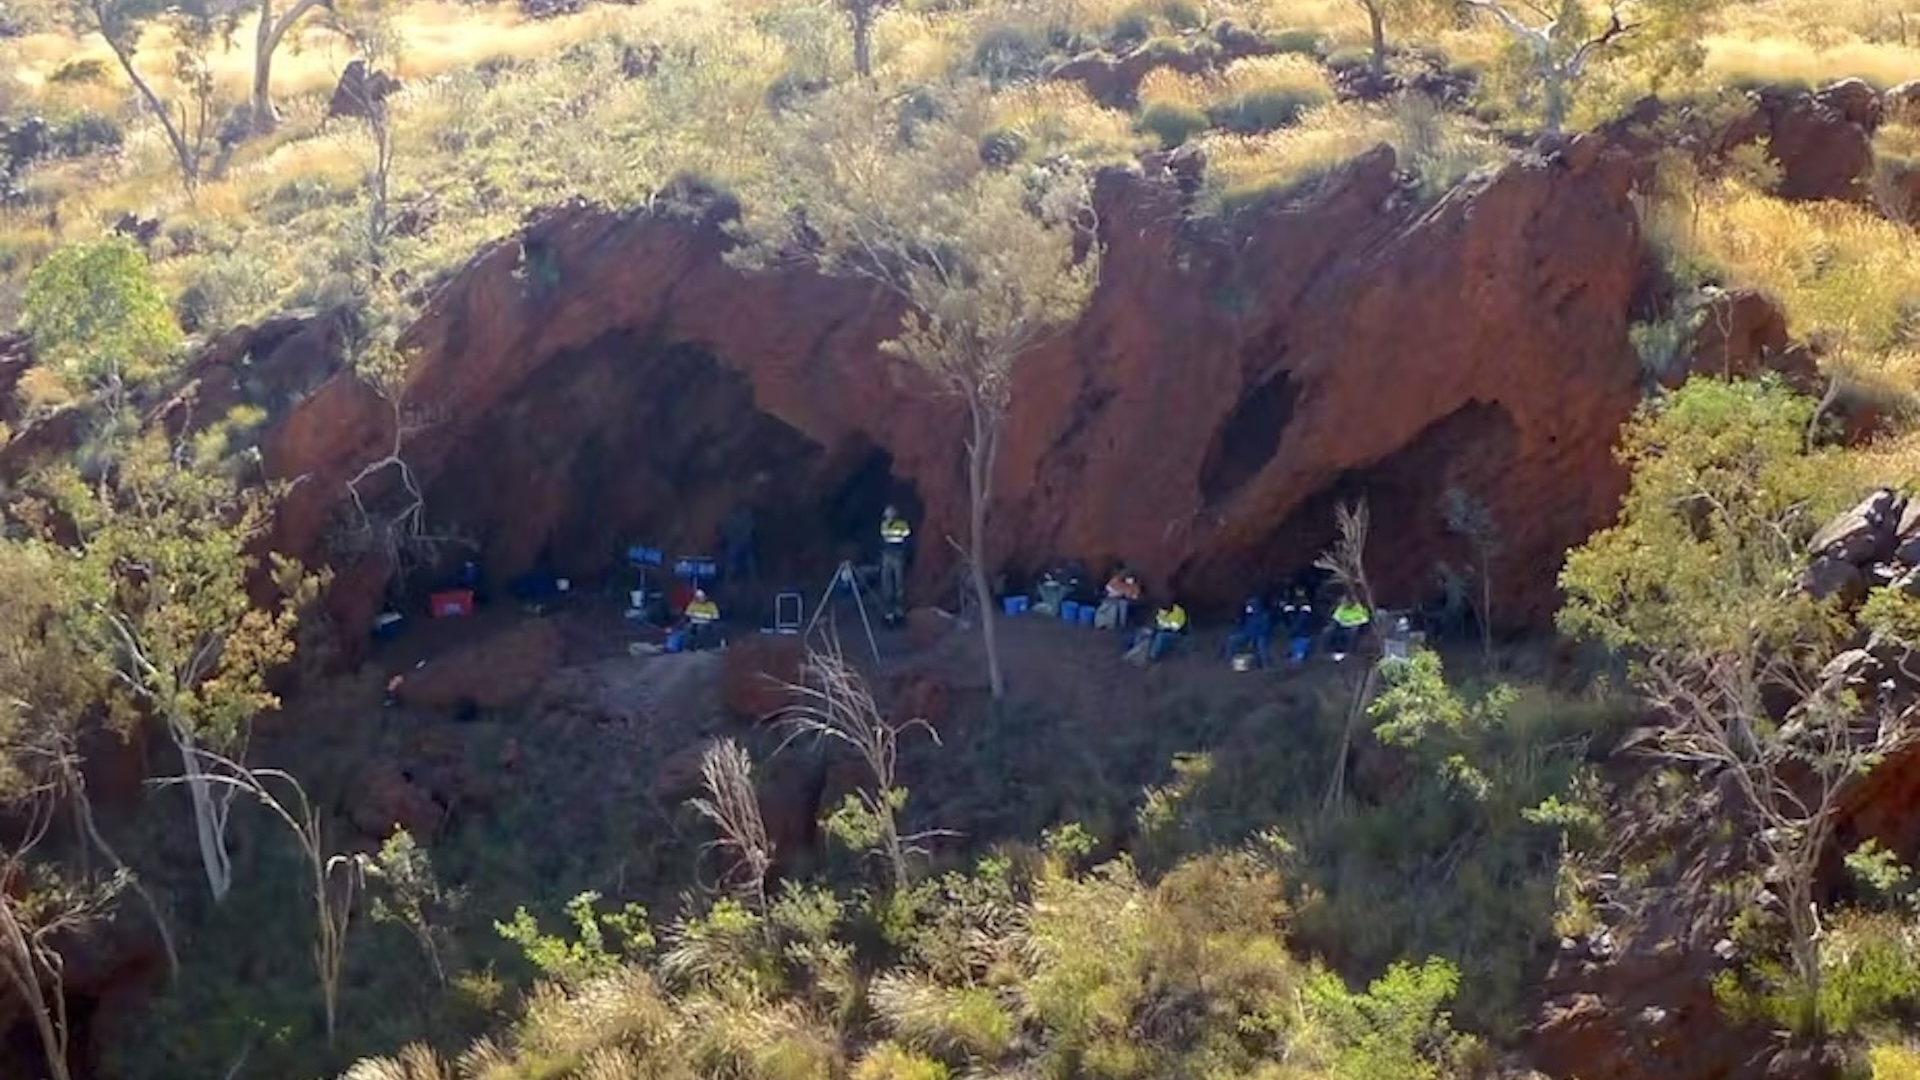 47,000 years of Aboriginal history destroyed in mining blast in Australia